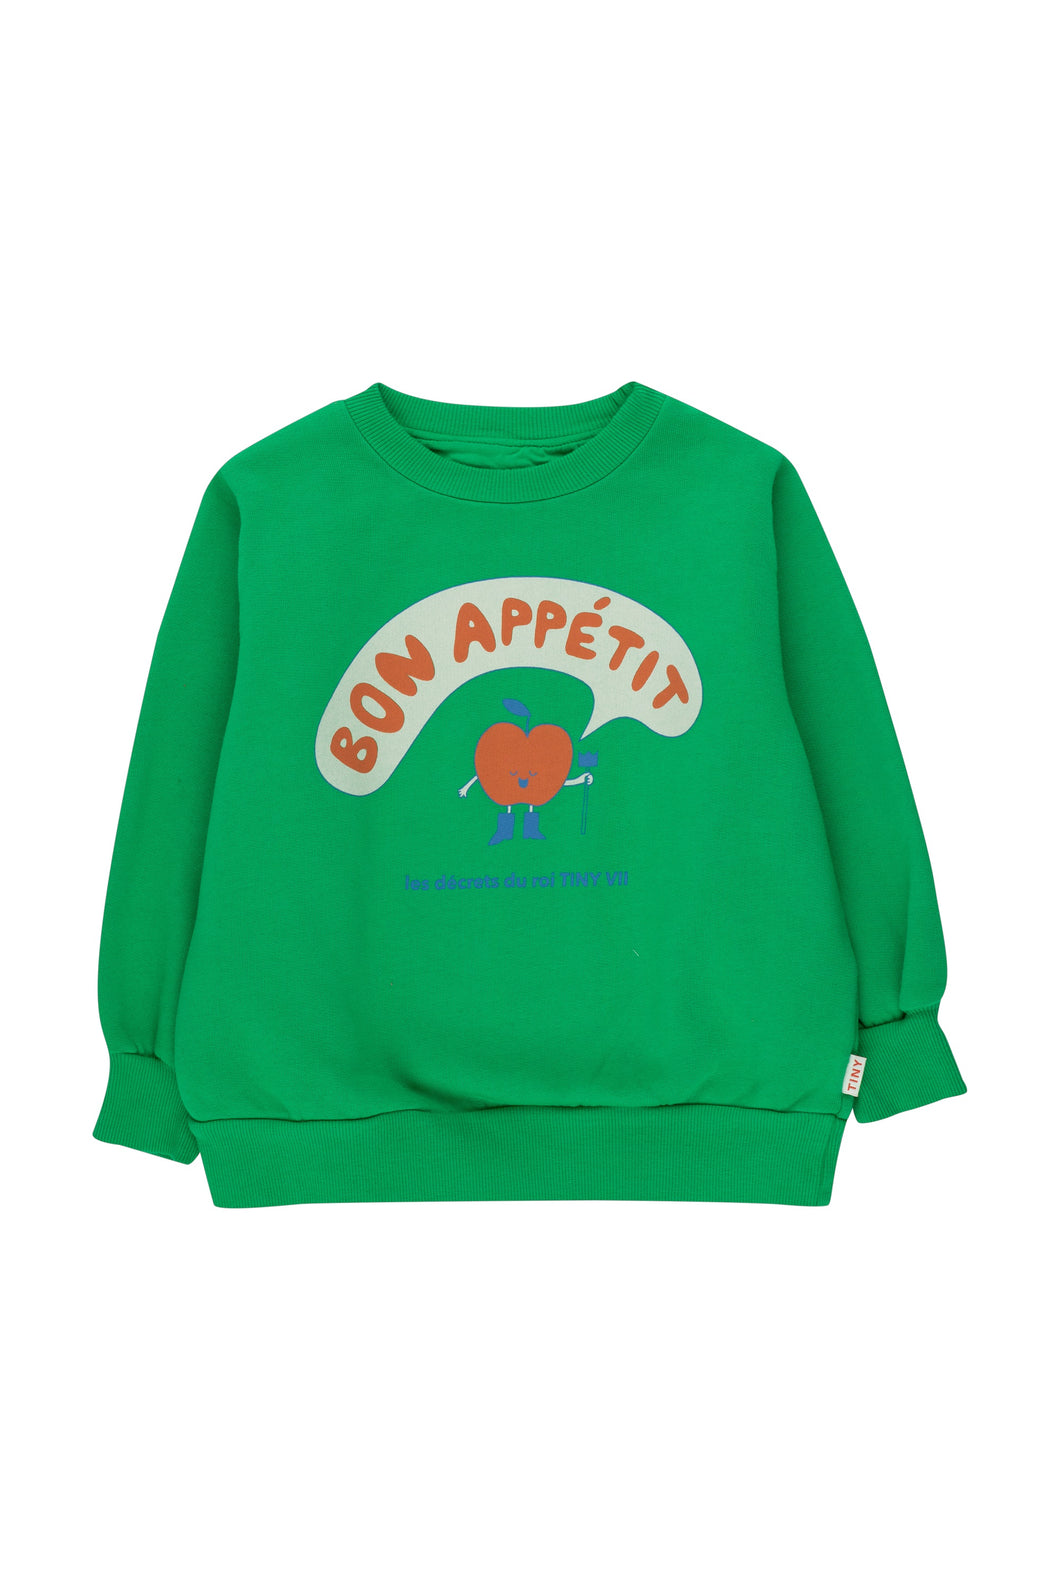 Bon Appetit Sweatshirt